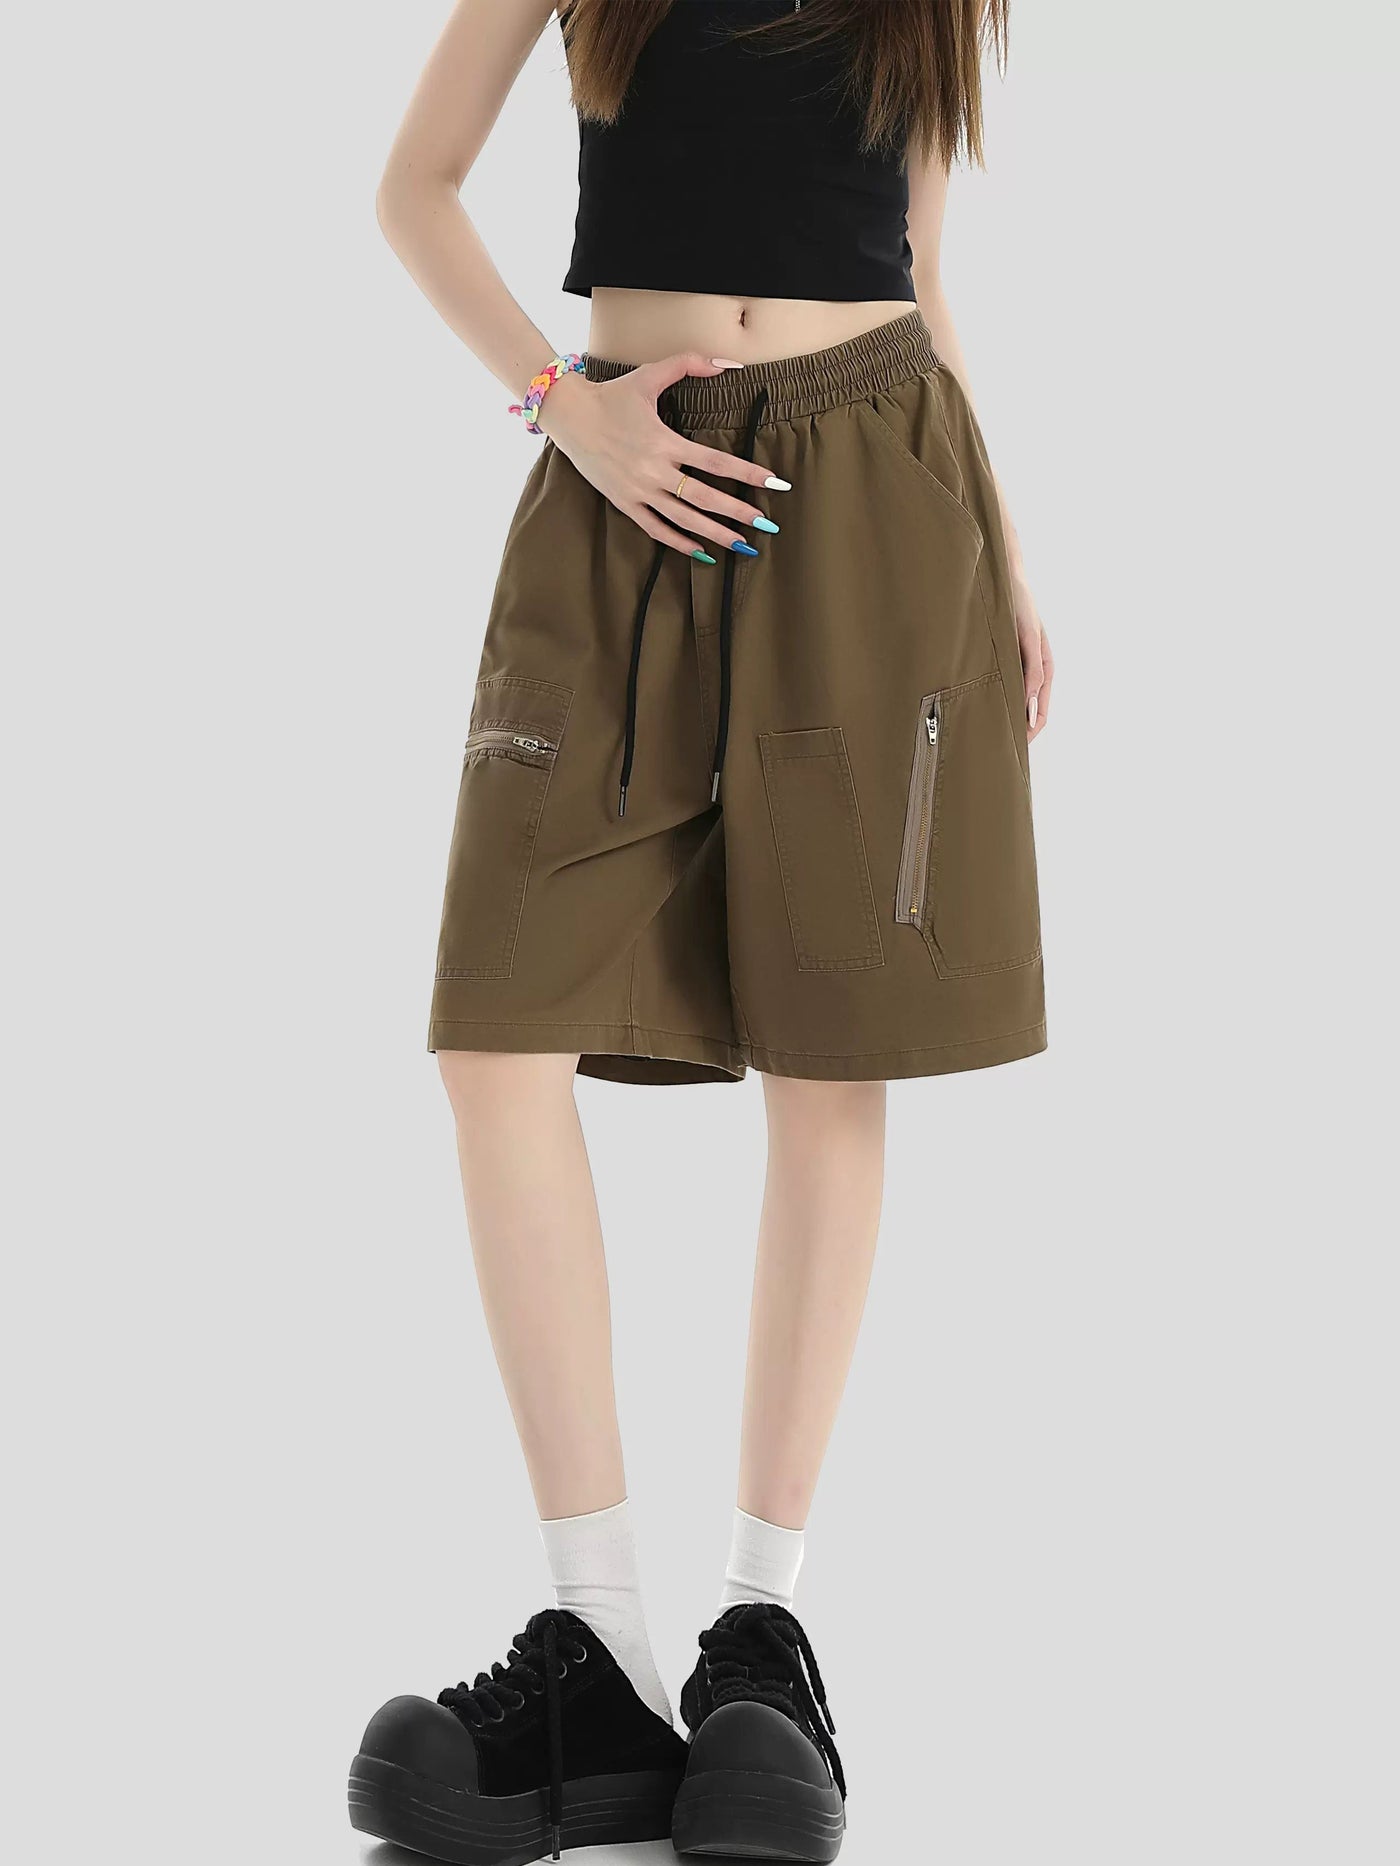 Non Parallel Zip Denim Shorts Korean Street Fashion Shorts By INS Korea Shop Online at OH Vault